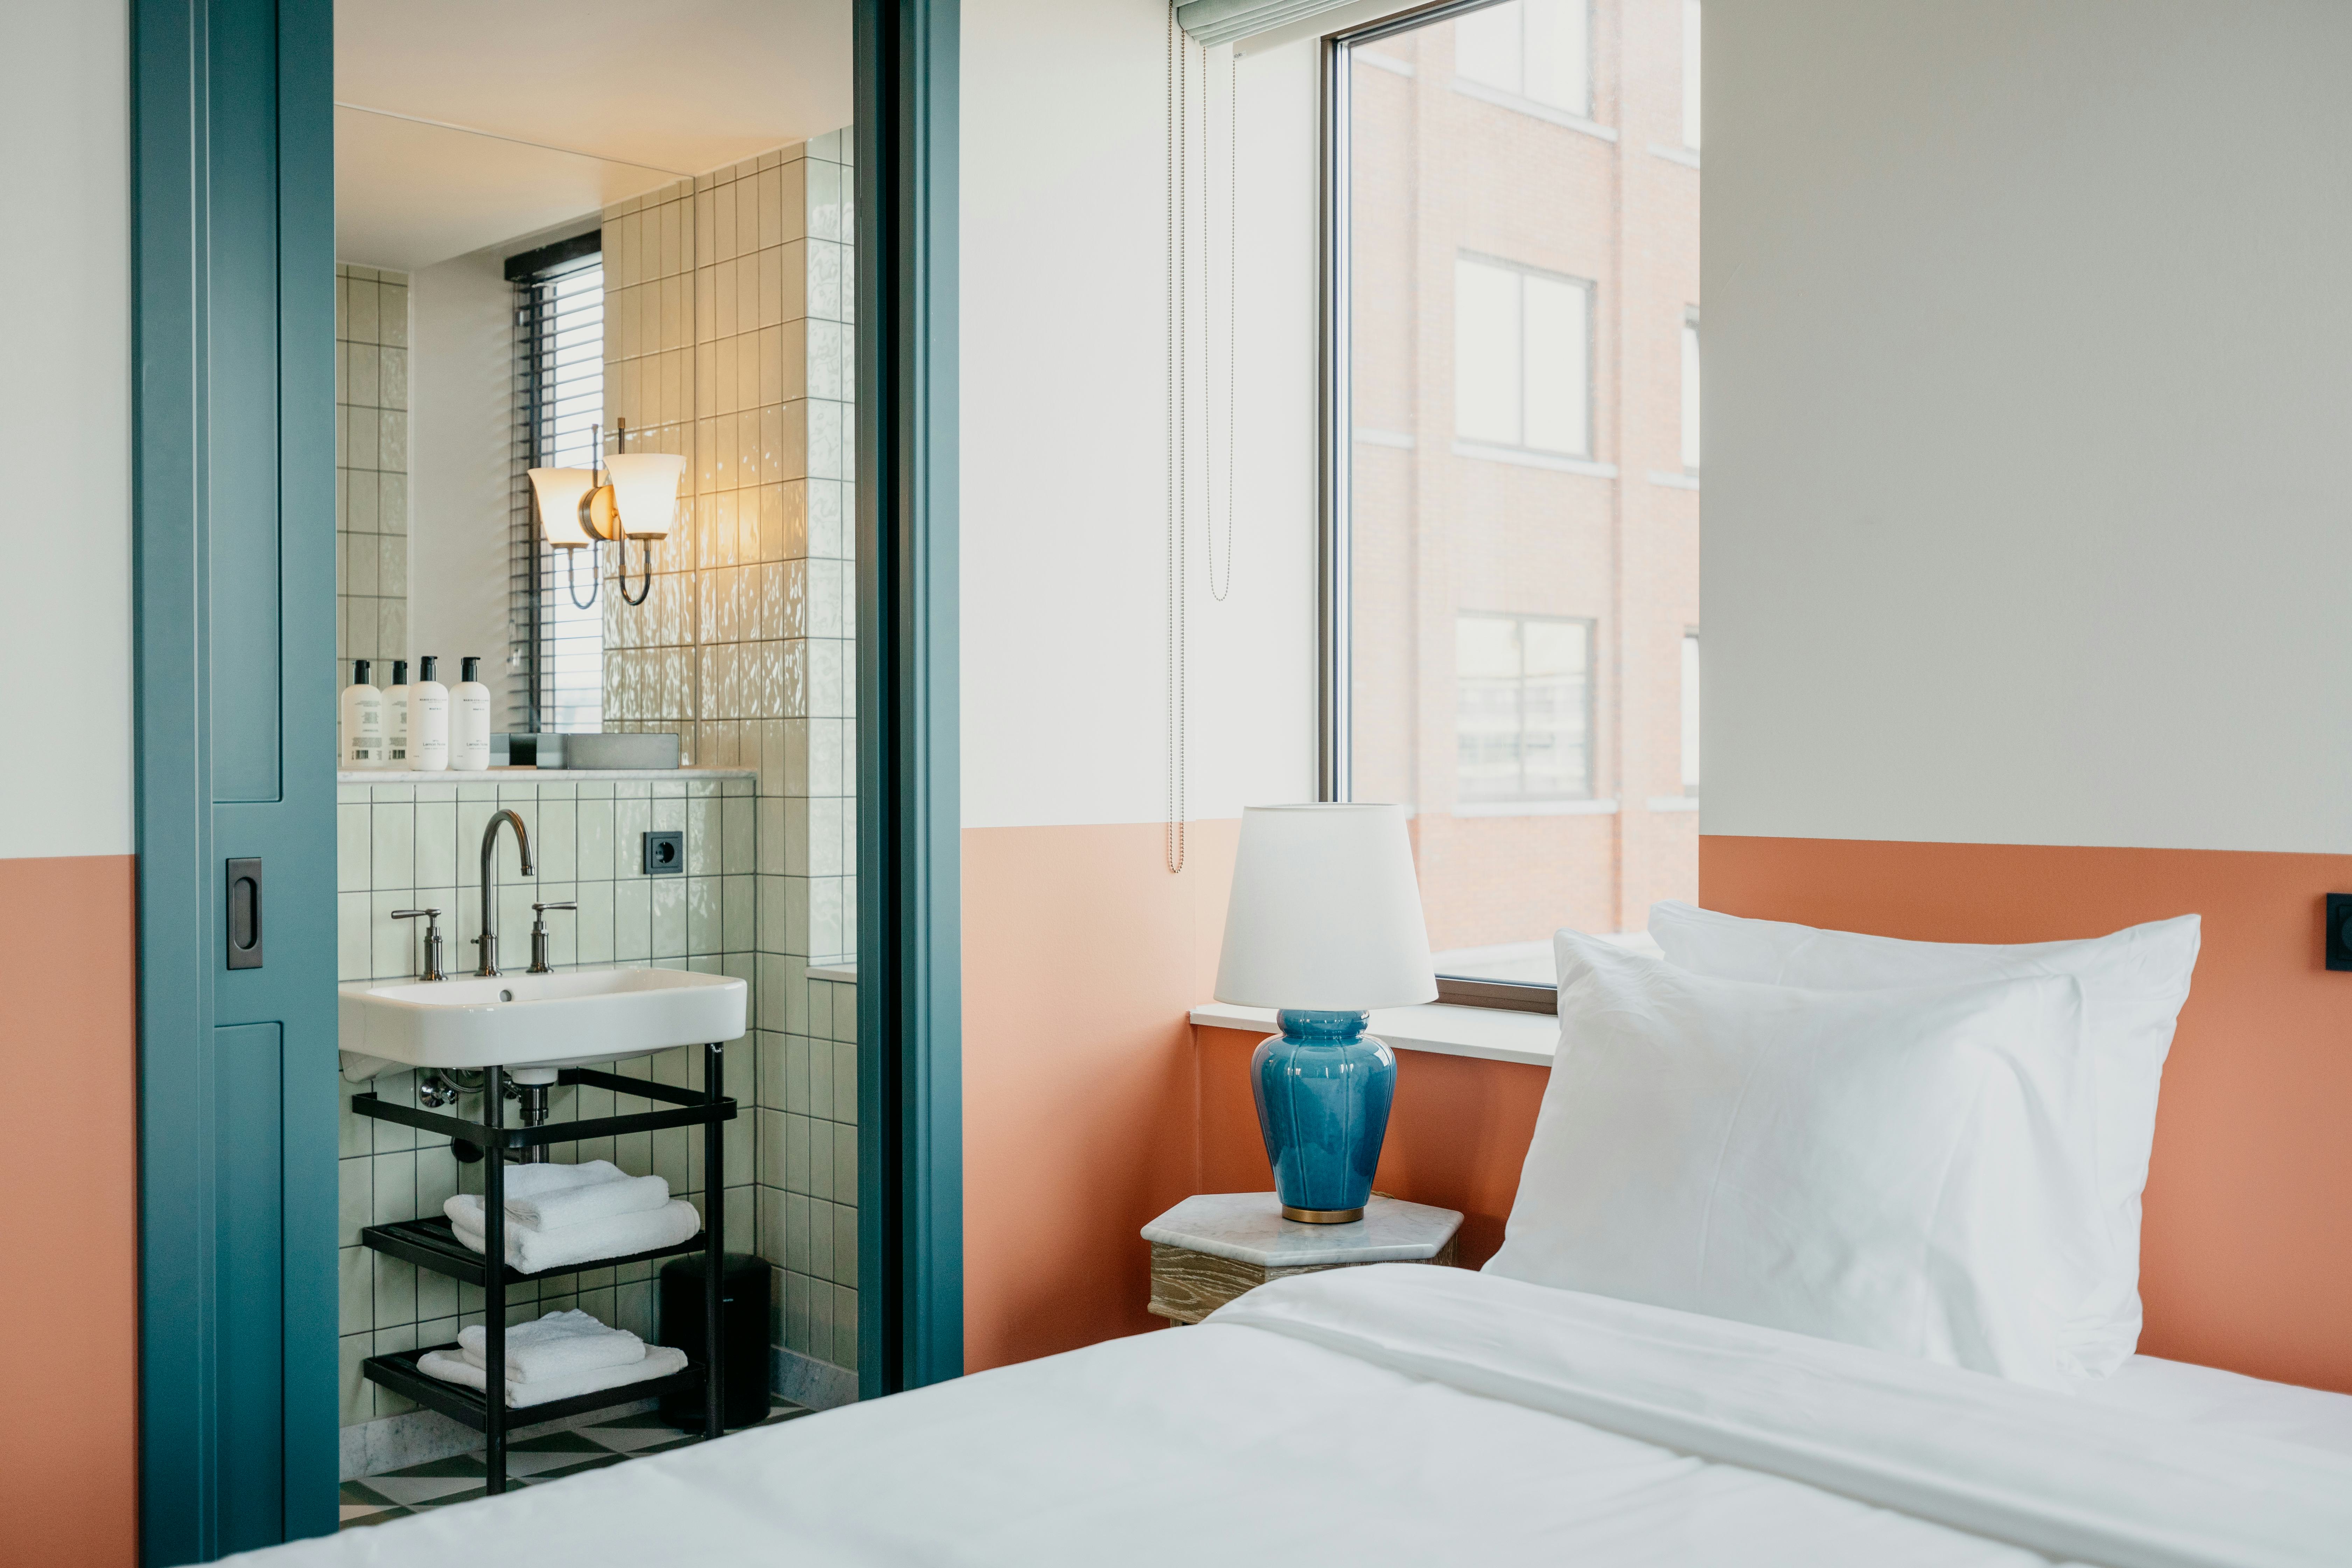 Foto's: 82 kamers in nieuw hotel Boat&Co Amsterdam